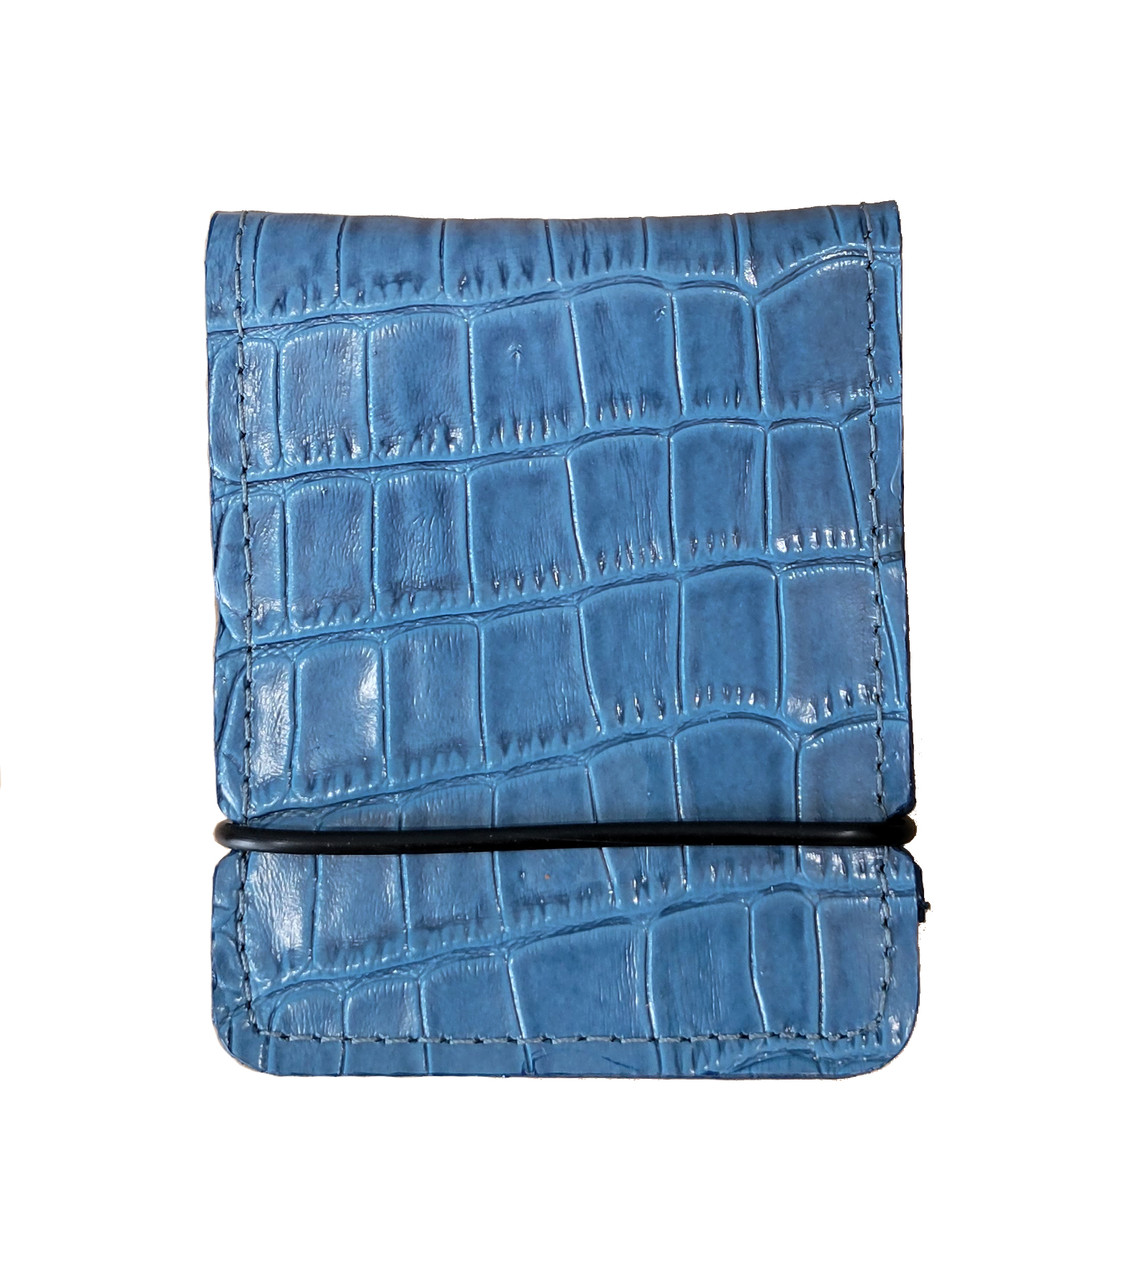 Orange Crocodile Pattern Pu Leather Wallet With Multiple